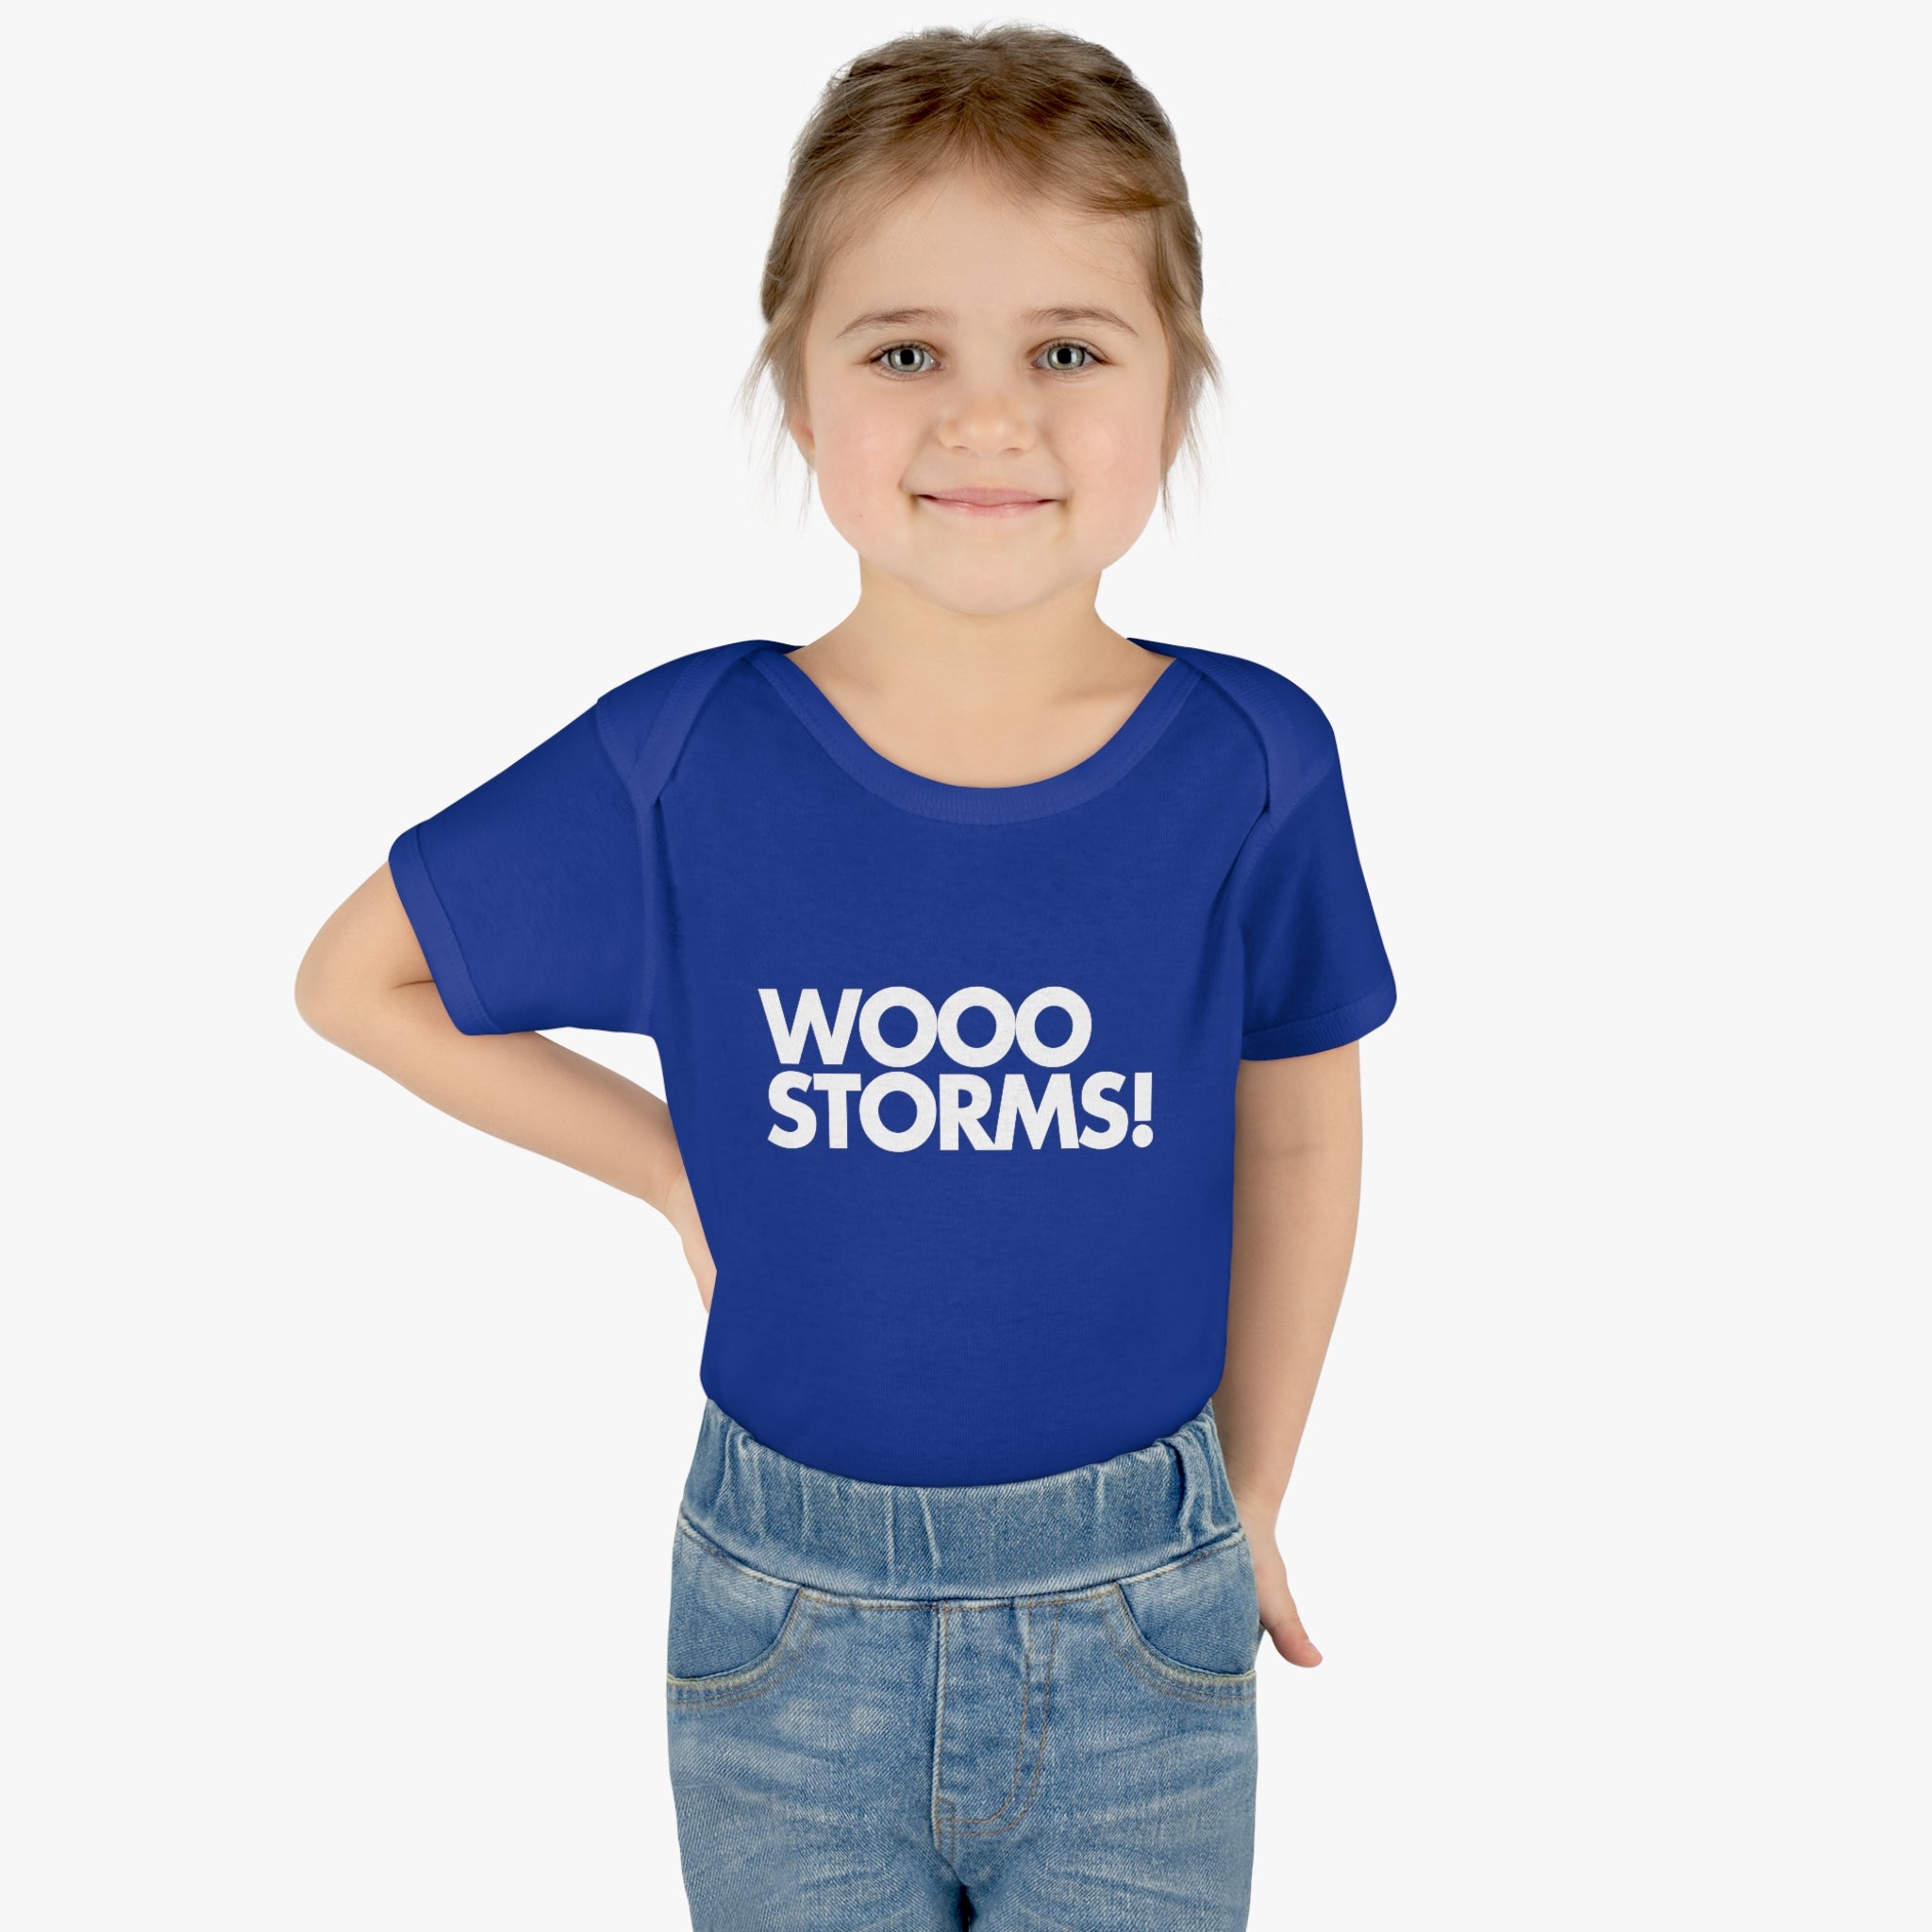 Wooo Storms! Infant Bodysuit 